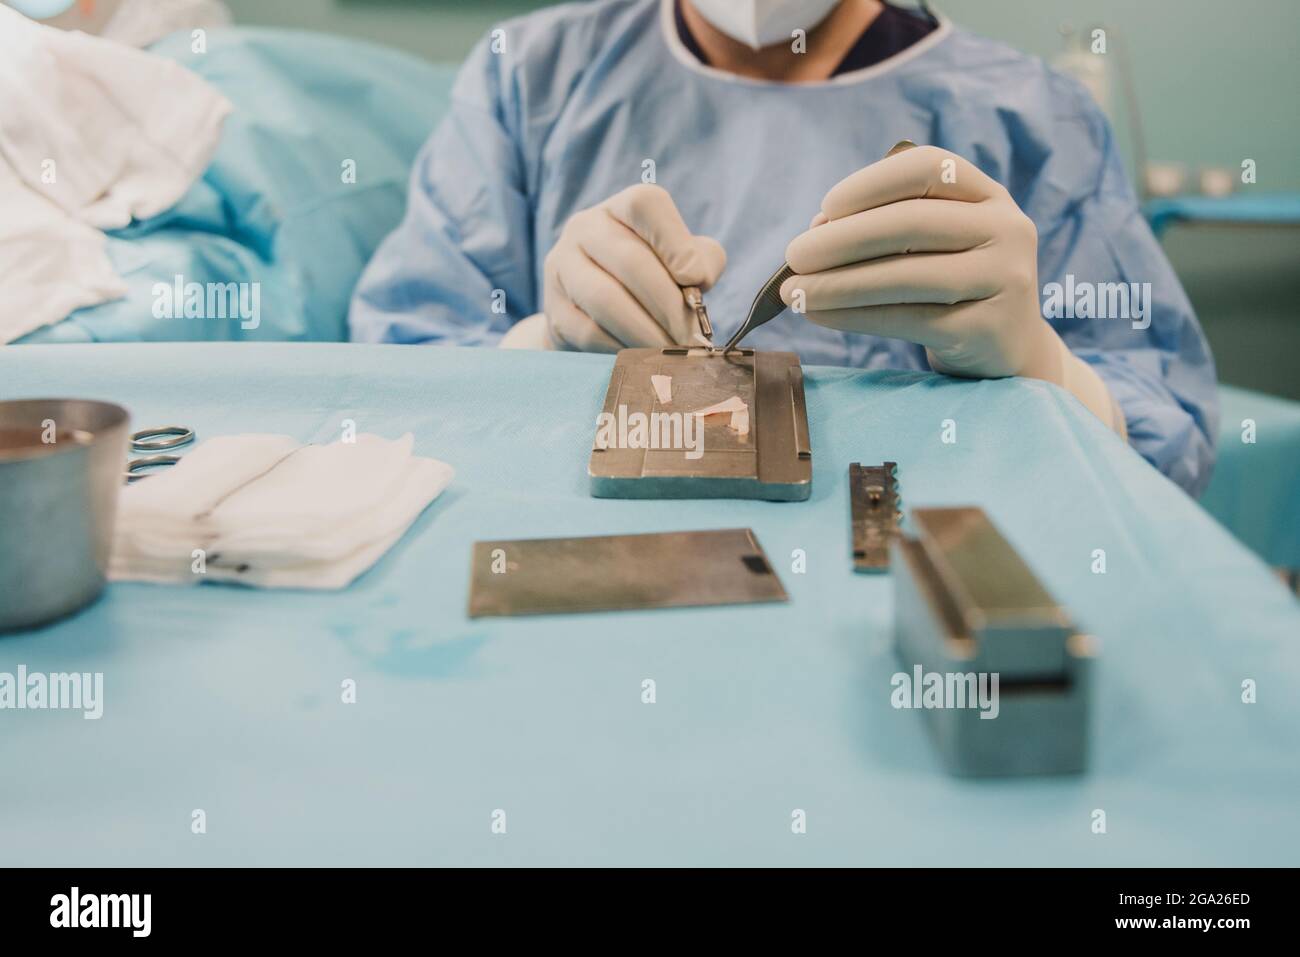 Medical doctor working on rhinoplasty operation inside hospital room - Focus on nurse right hand. Stock Photo